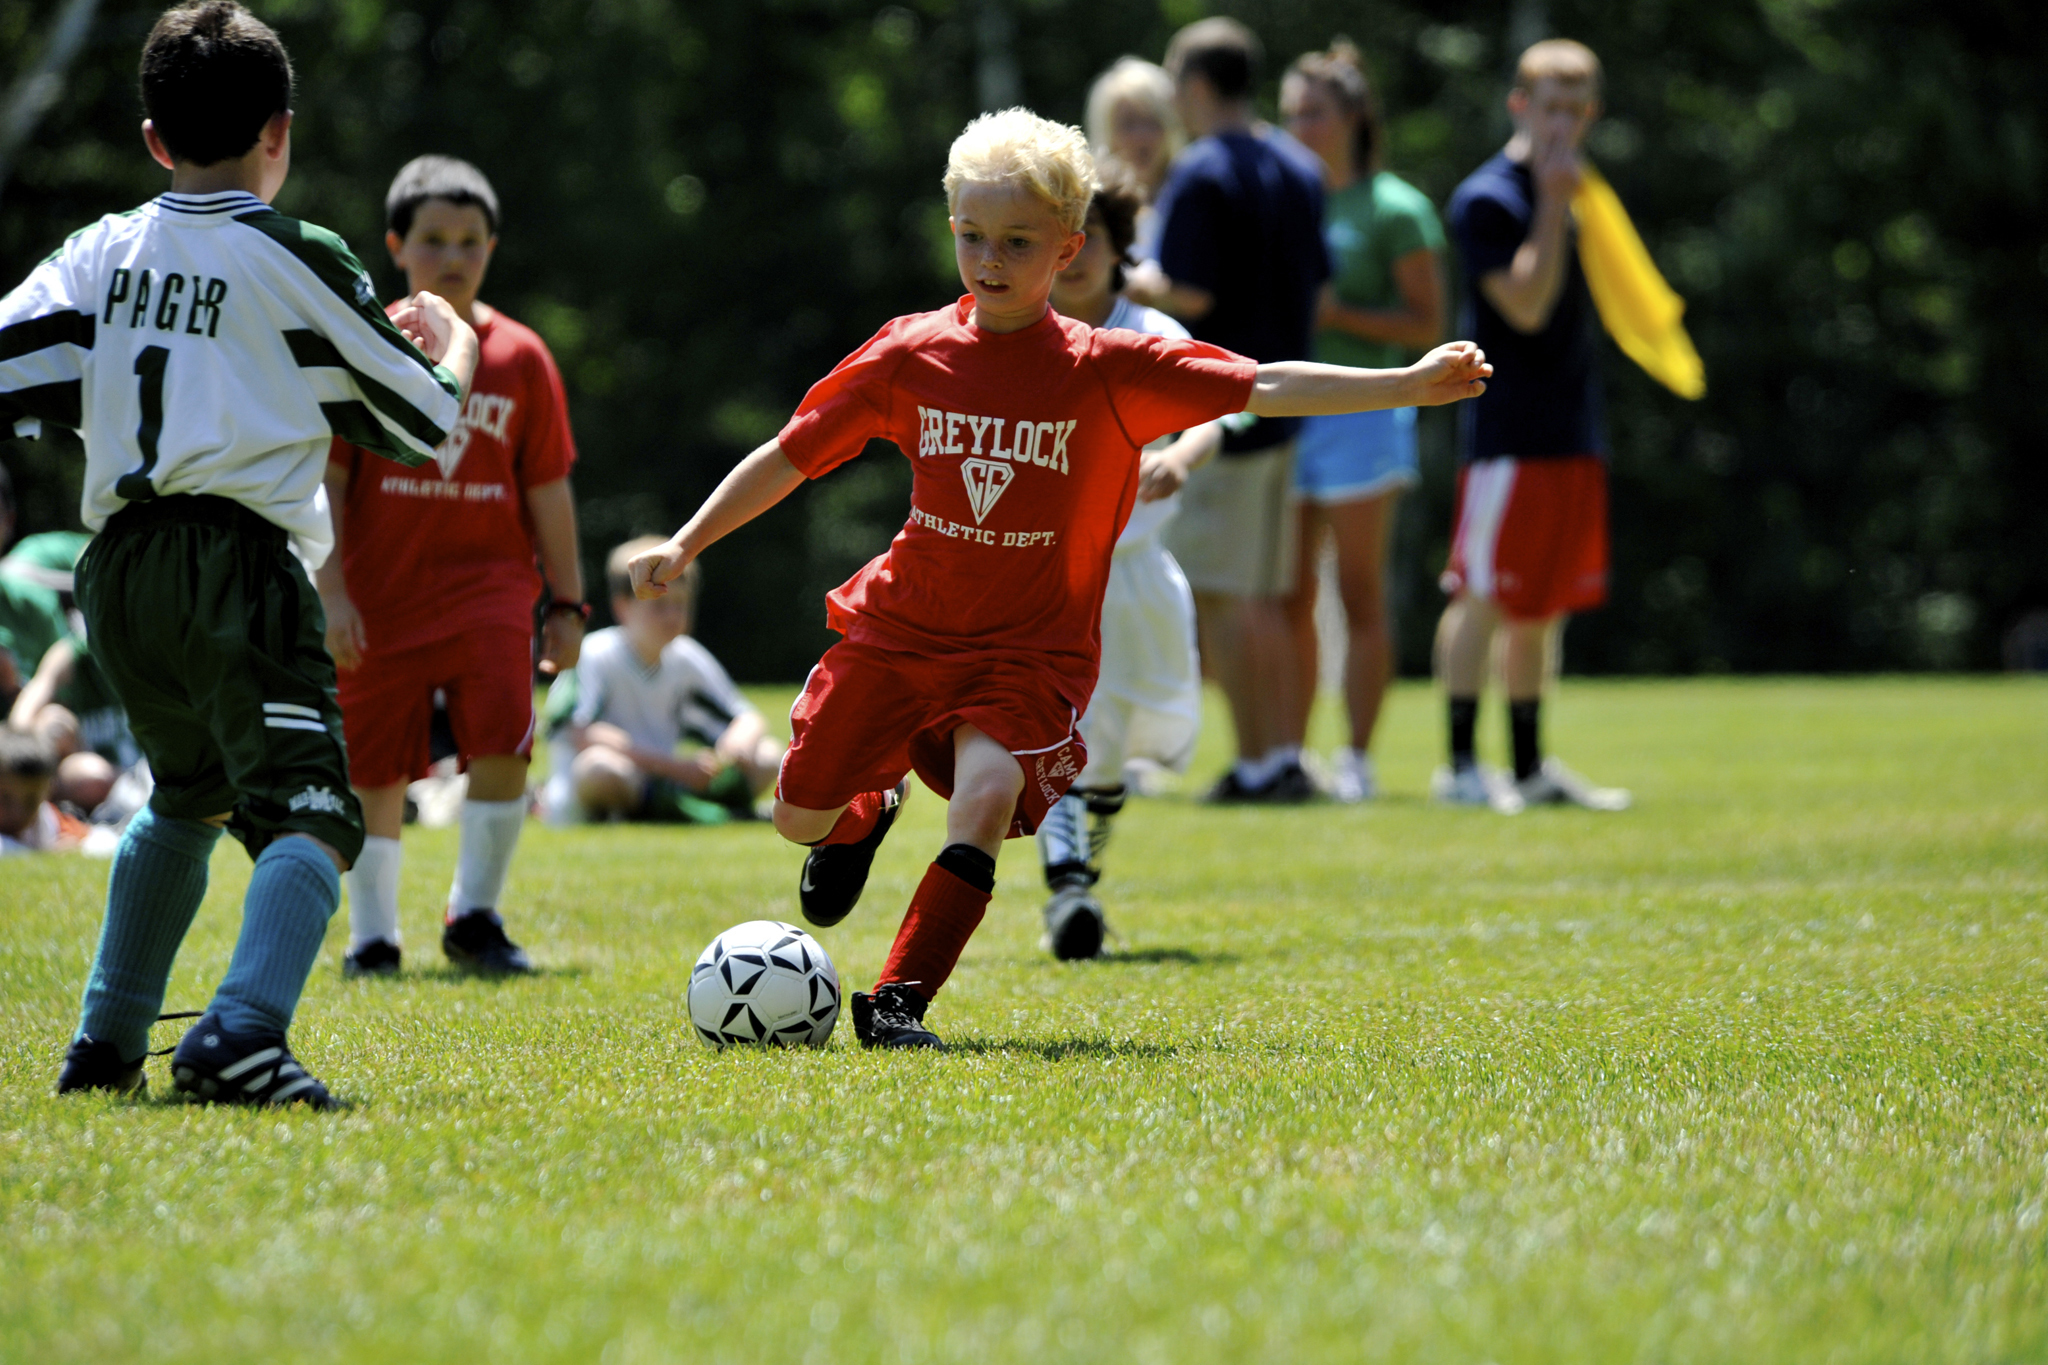 They play football well. Игра футбол. Футбол дети. Дети играющие в футбол. Детский футбол Германия.